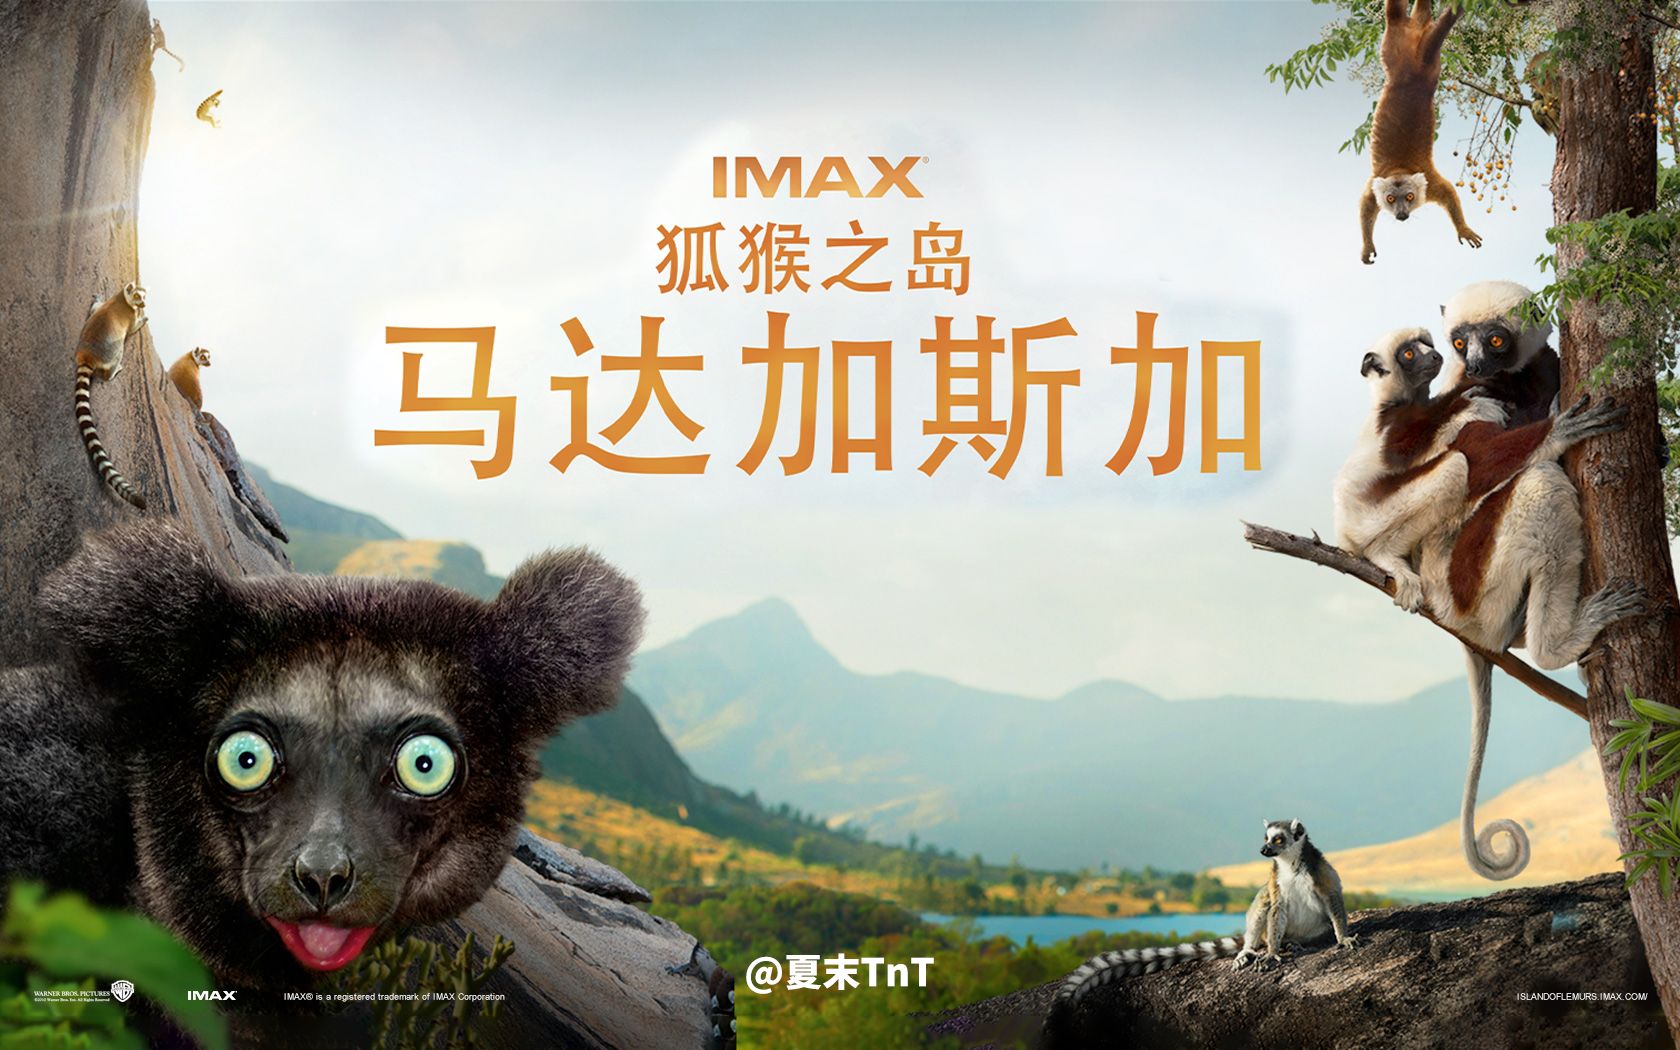 【IMAX纪录片】马达加斯加：狐猴之岛 中英双语字幕 Island of Lemurs: Madagascar